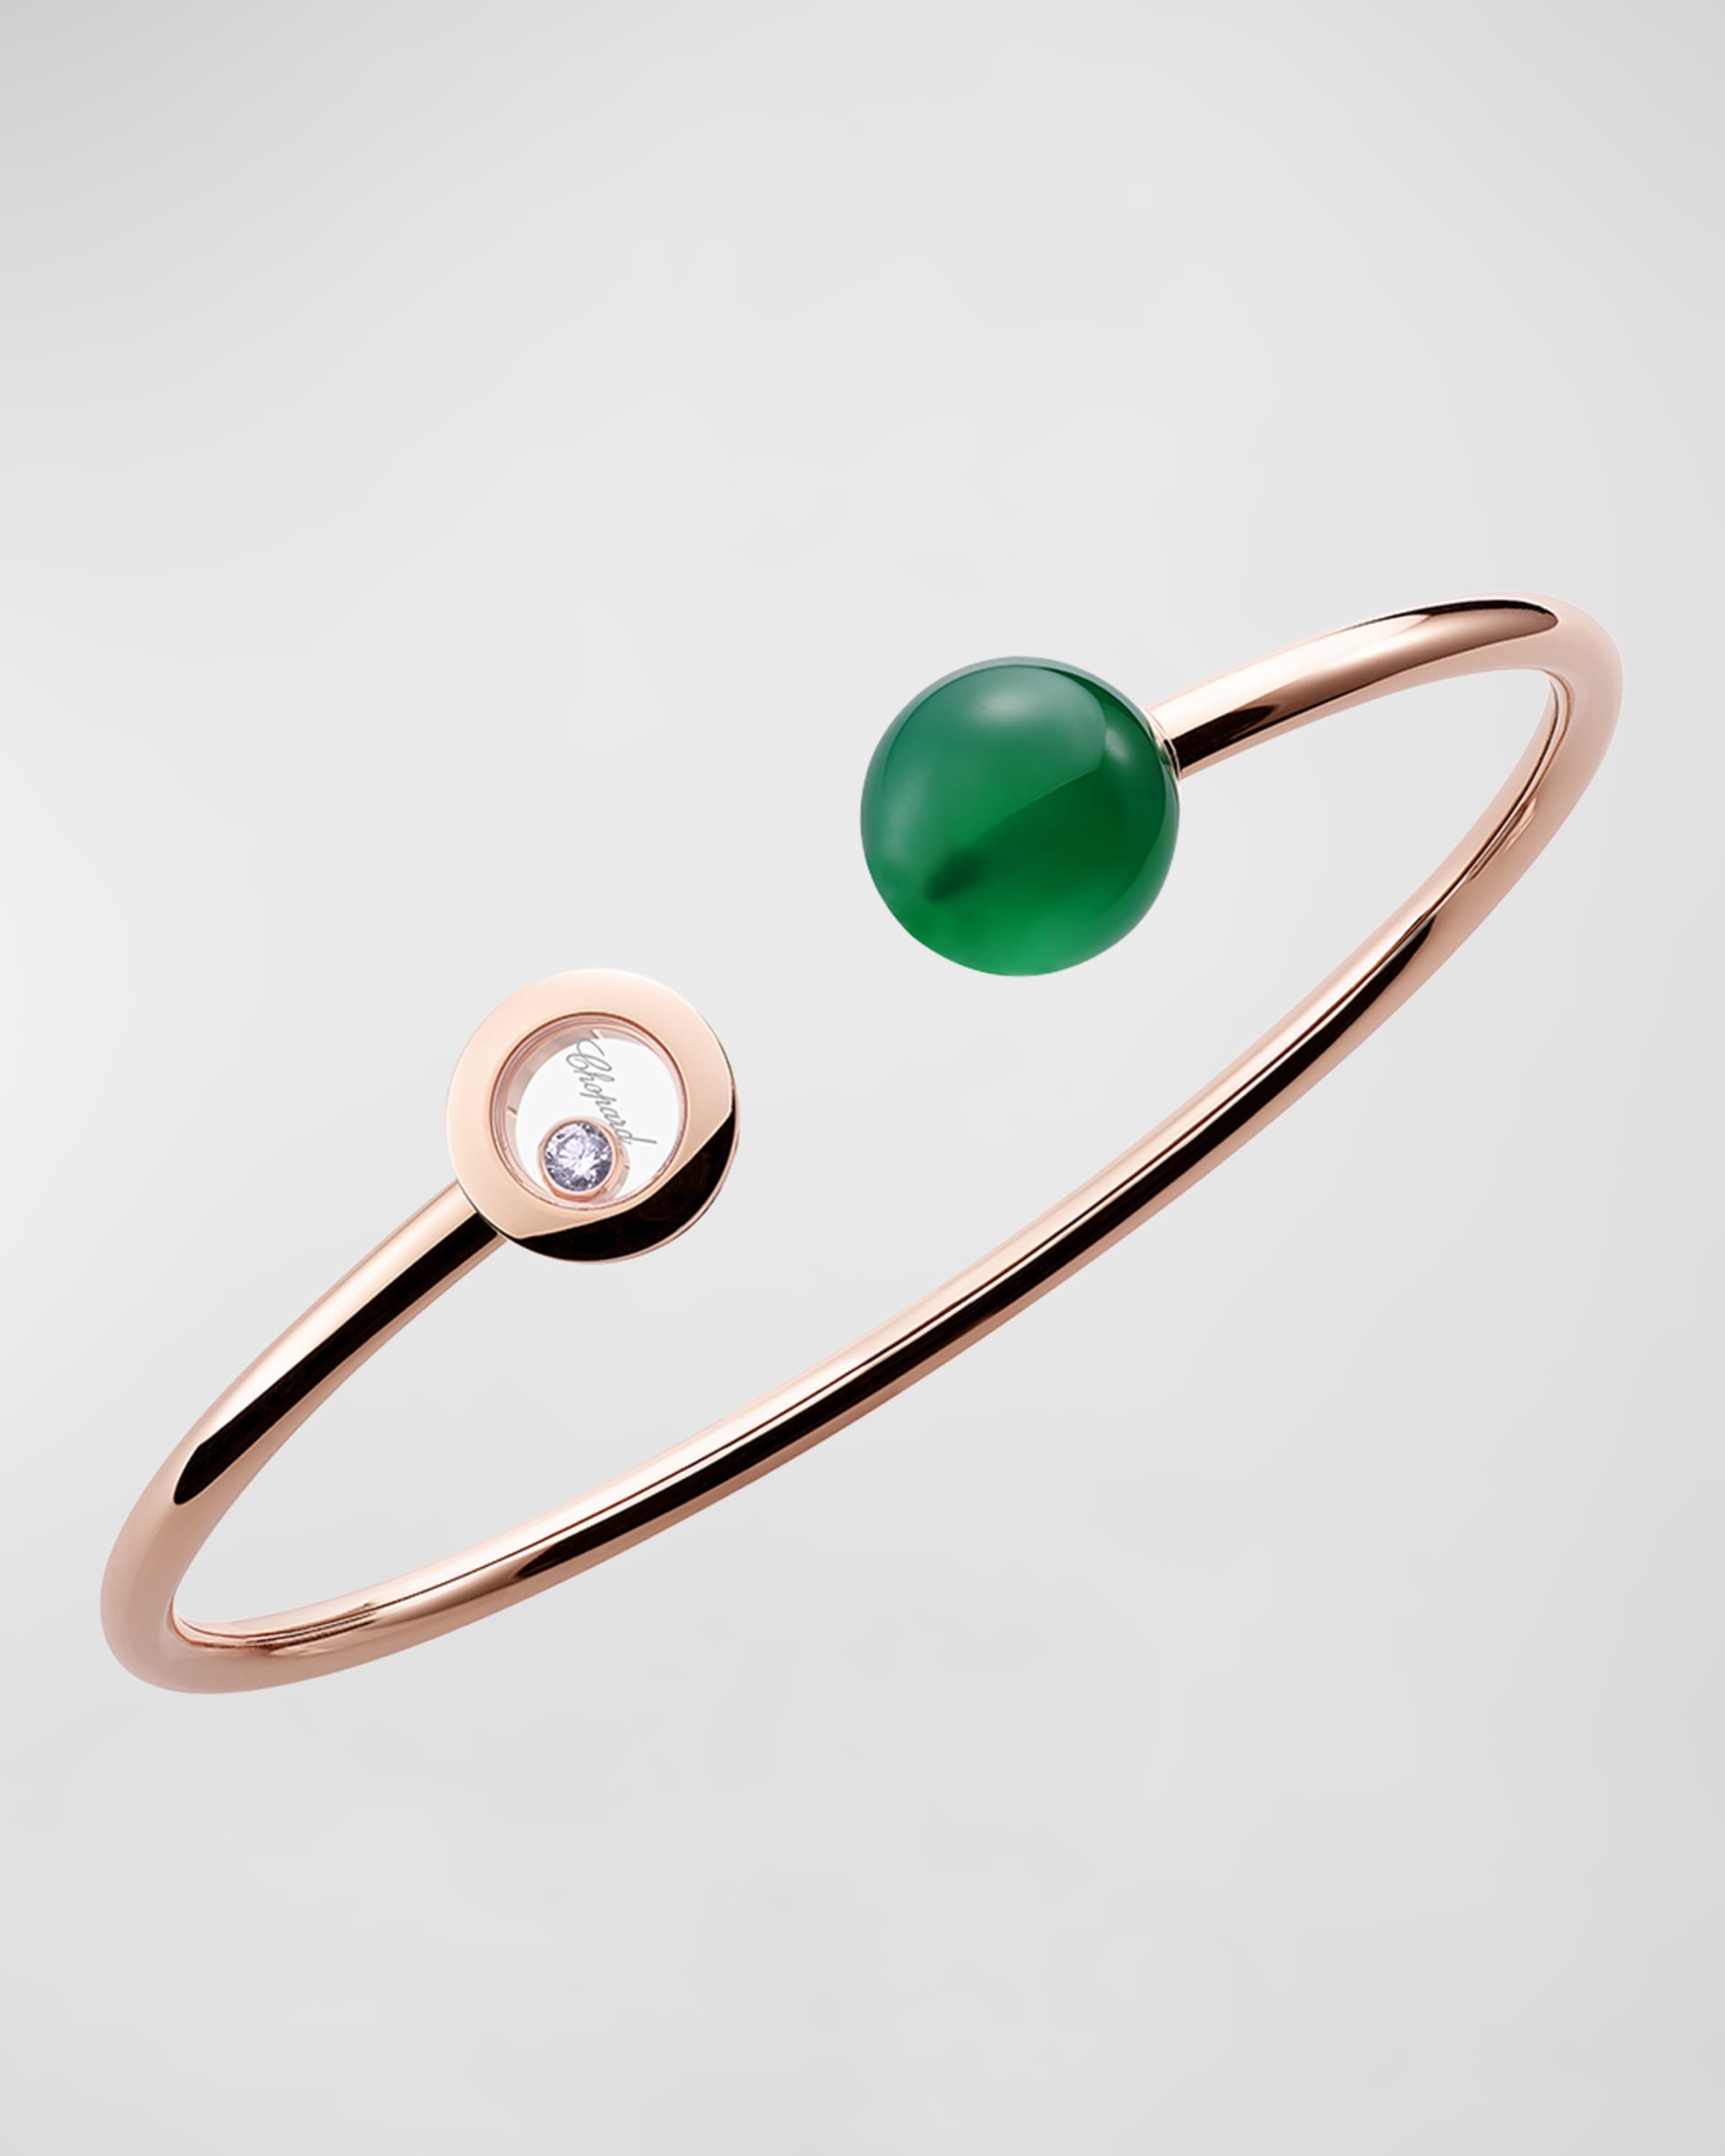 Happy Diamonds Planet 18K Rose Gold Green Agate Bracelet, Size Medium - 1